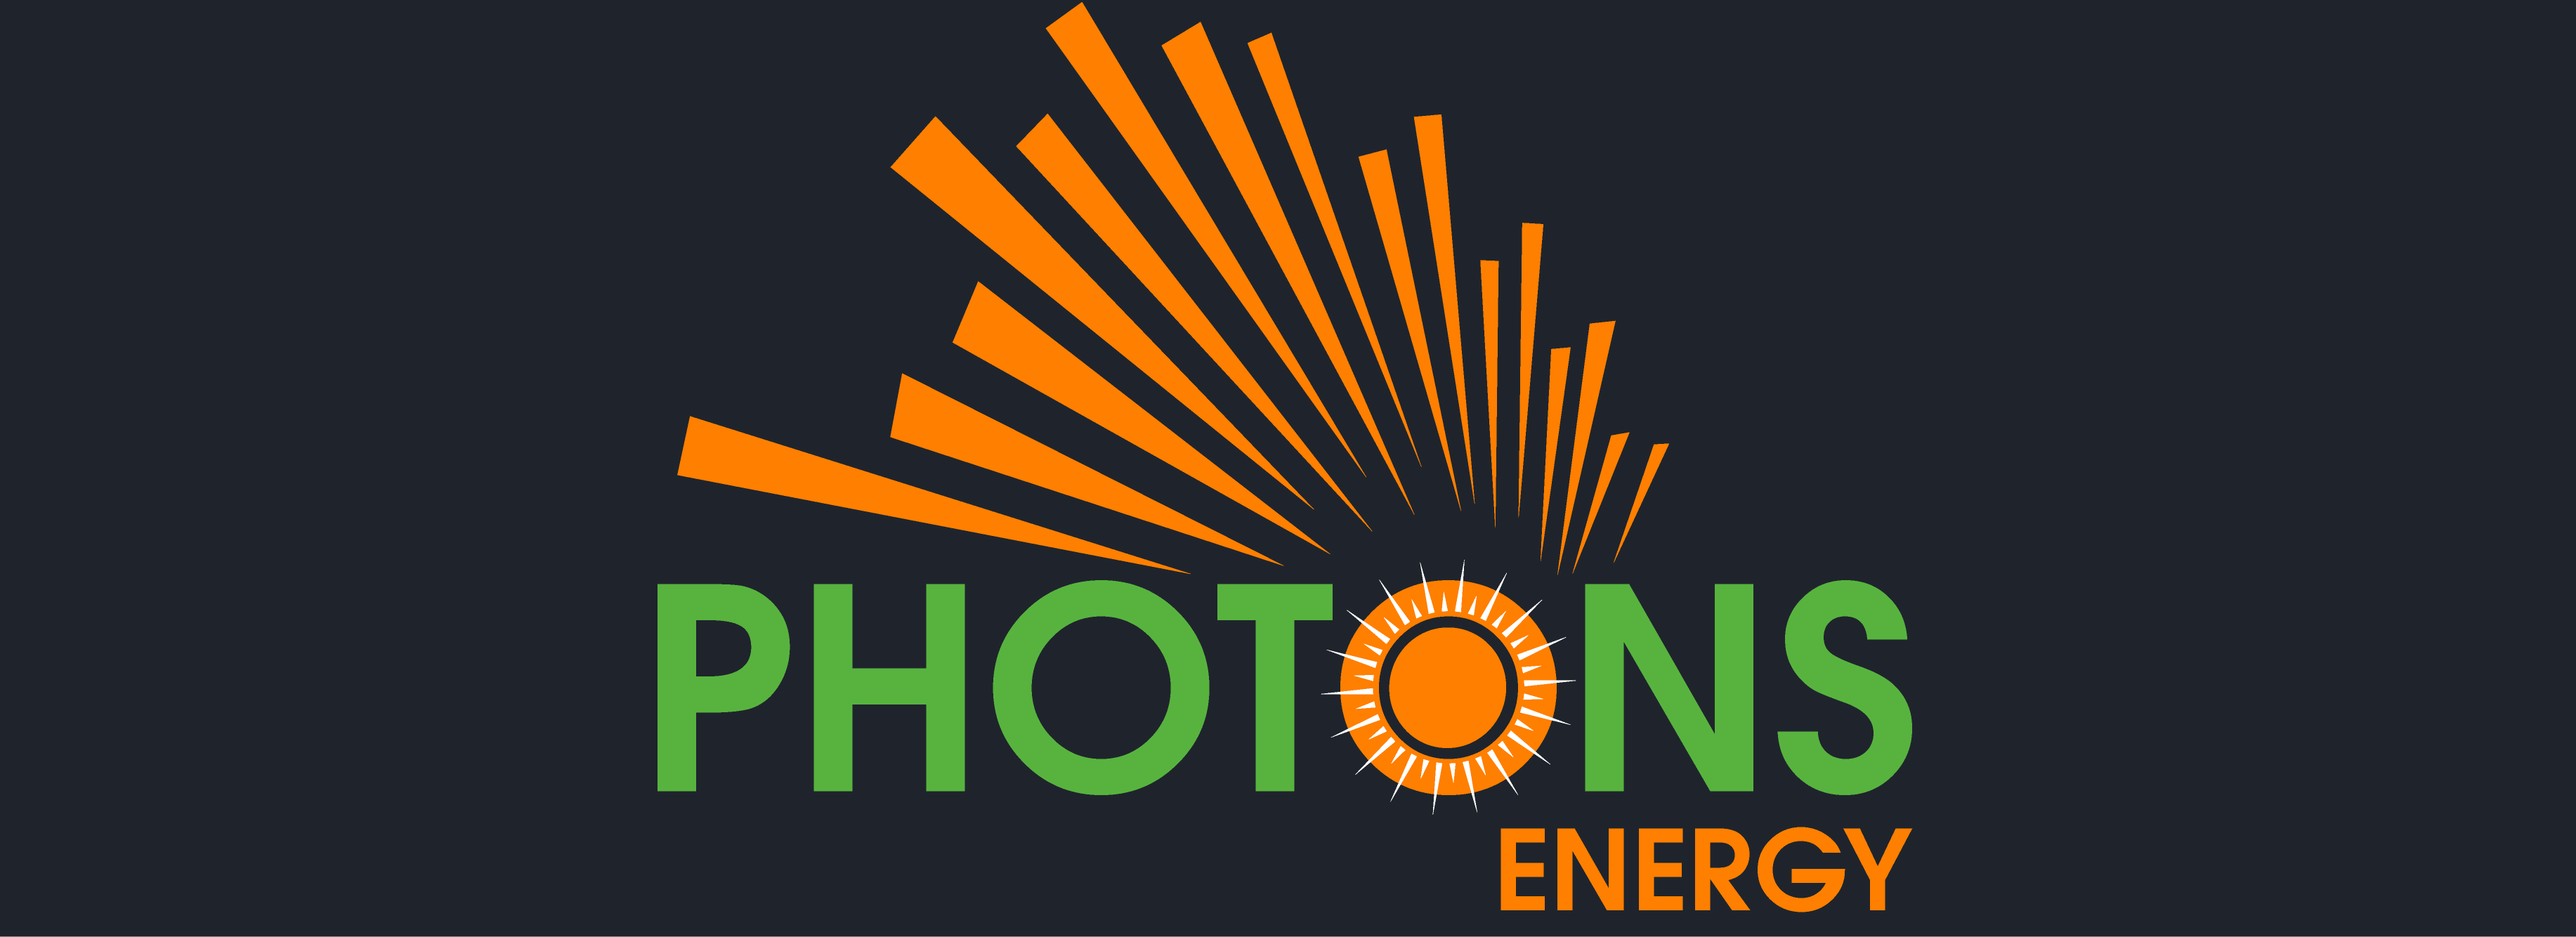 Photons energy logo with black background